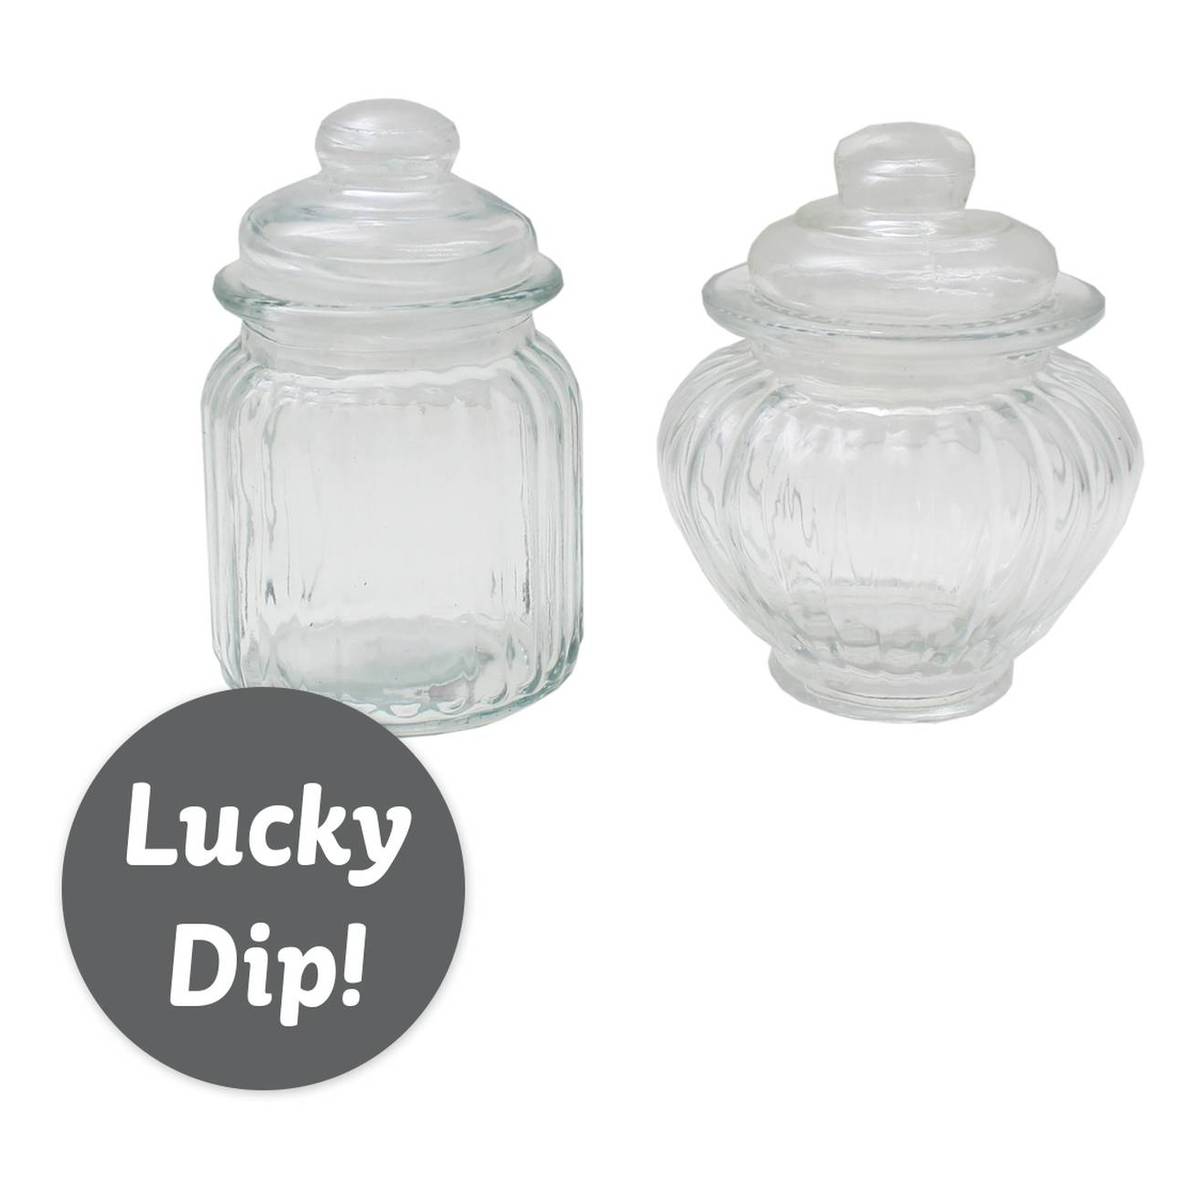 Buy Assorted Sweet Glass Storage Jar for GBP 2.50 | Hobbycraft UK